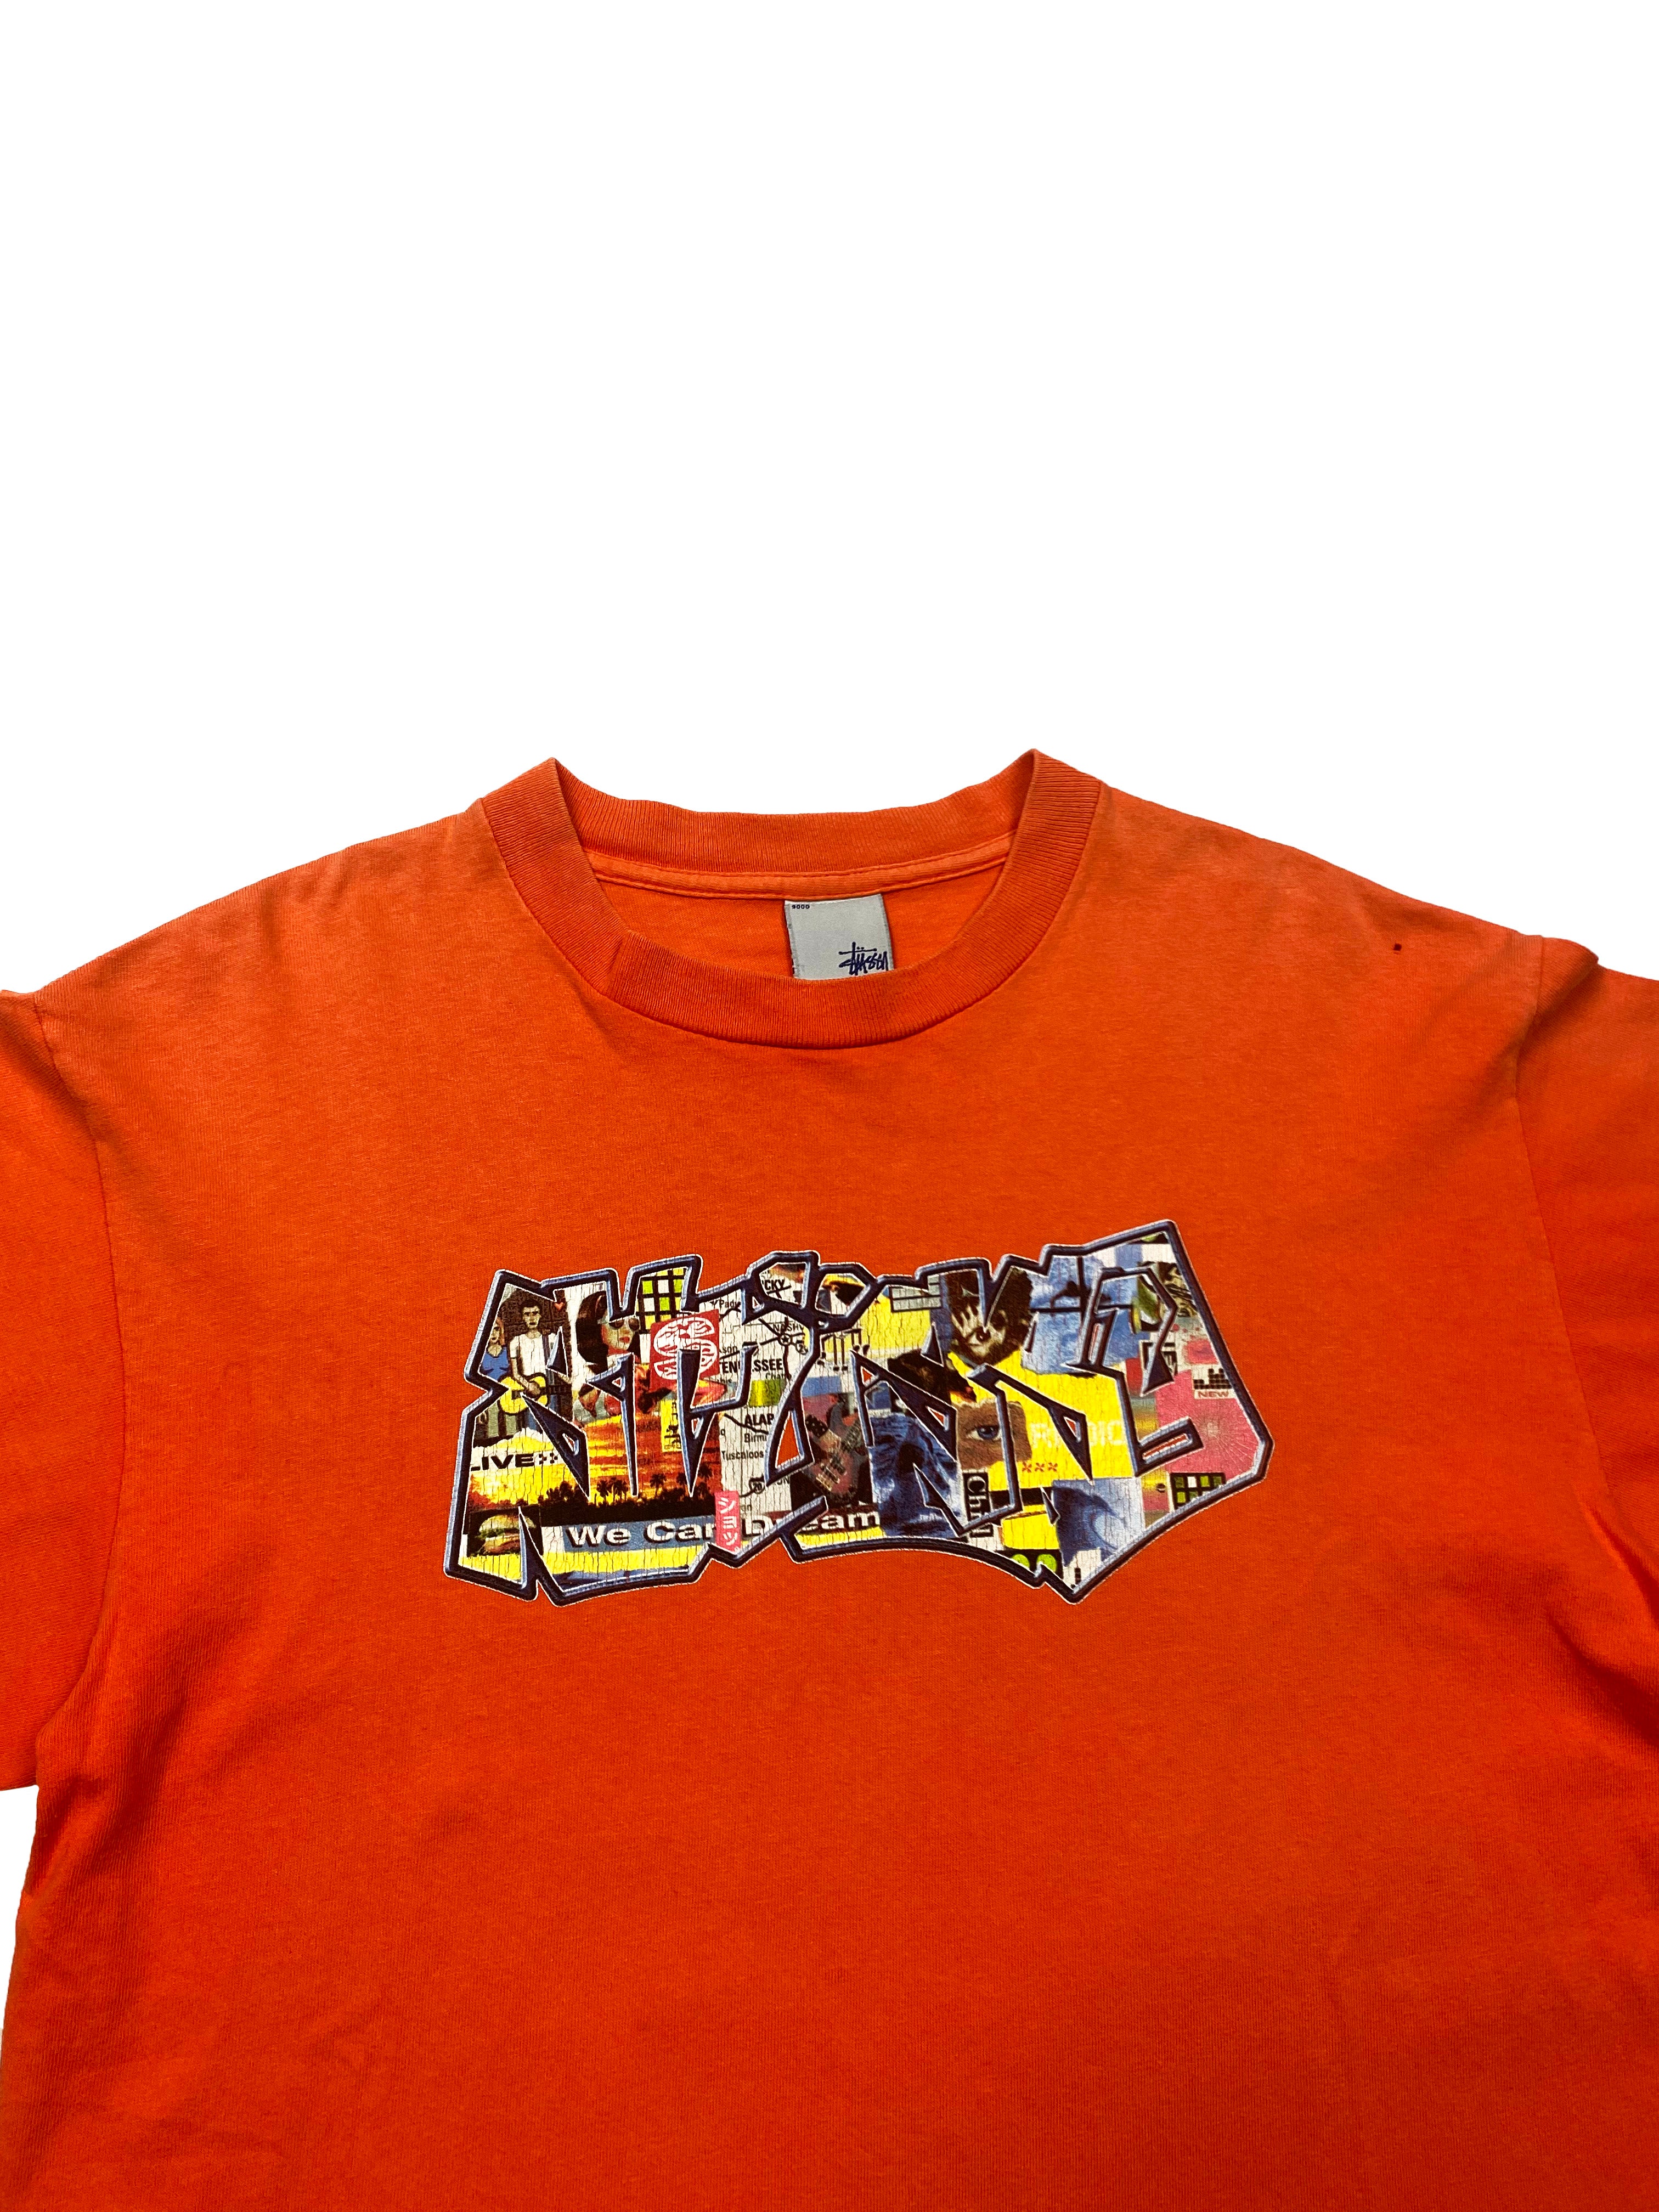 Stussy 'We Can Dream' Orange T-shirt 00's